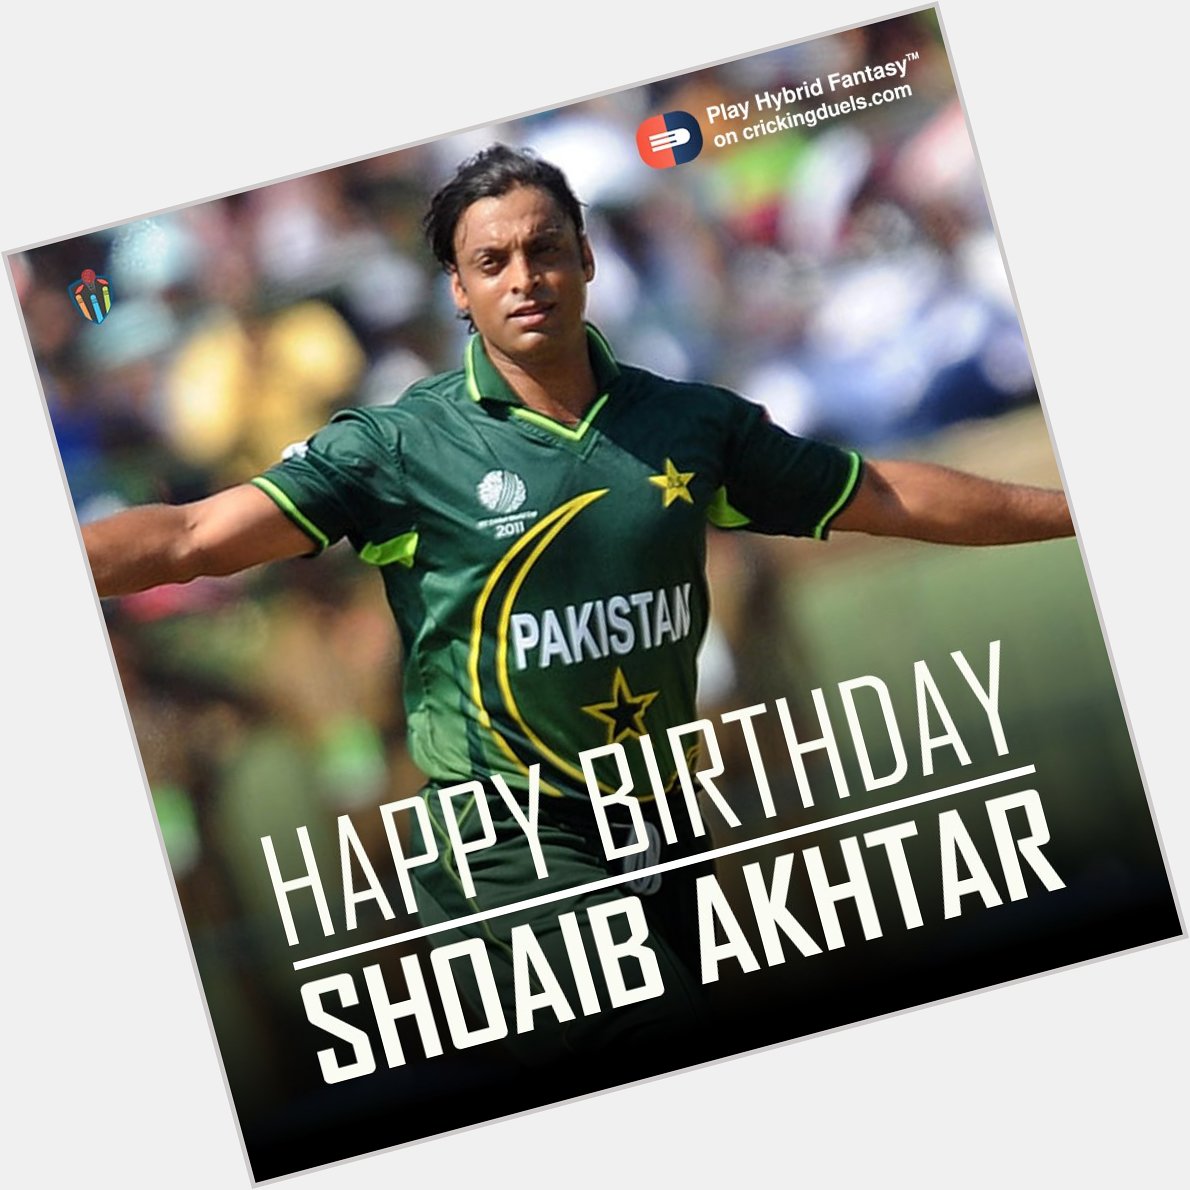 Happy Birthday,Shoaib Akhtar. The Pakistan cricketer turns 42 today. 